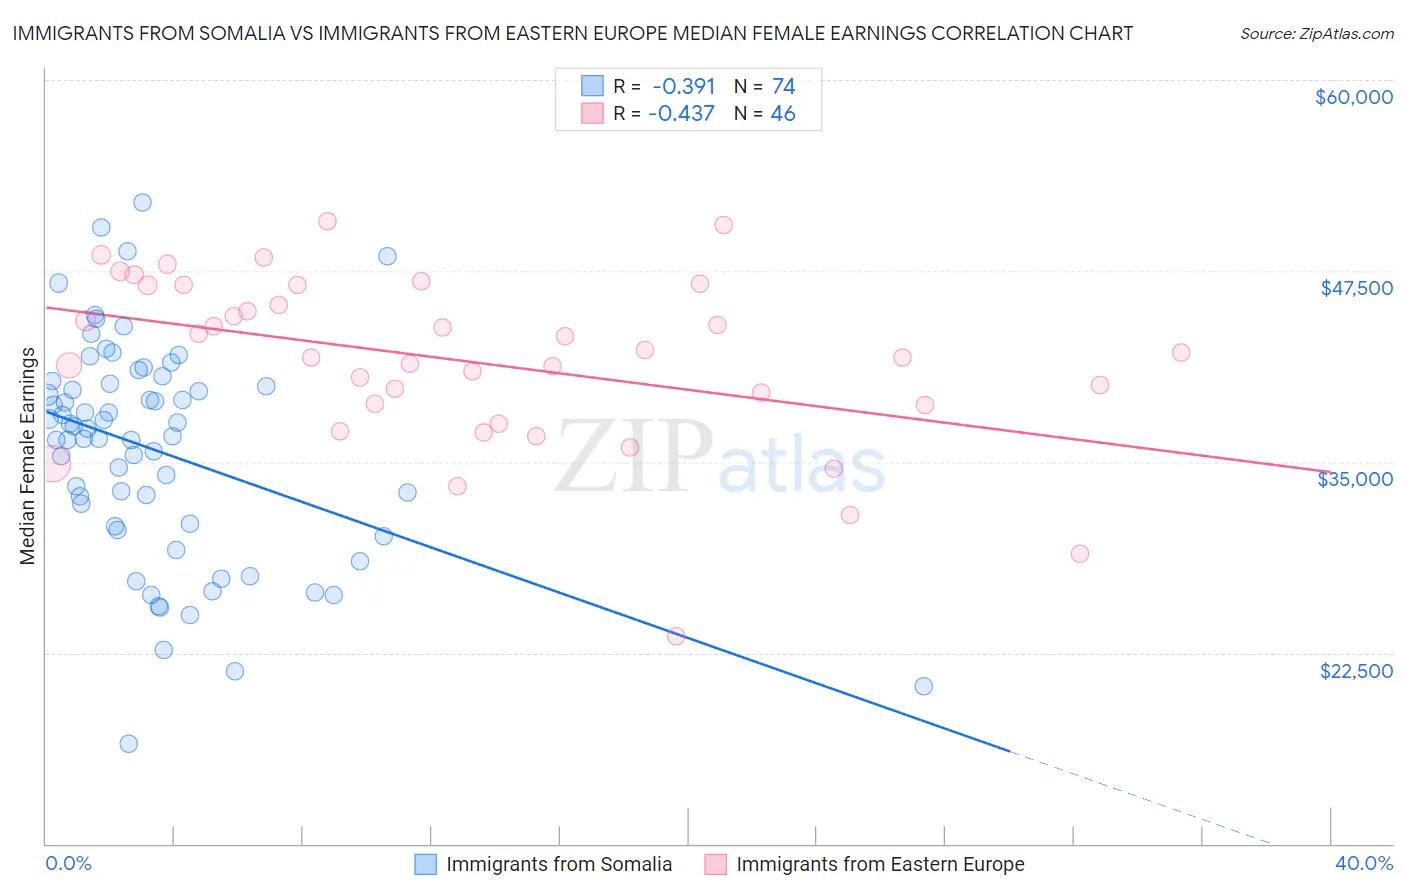 Immigrants from Somalia vs Immigrants from Eastern Europe Median Female Earnings